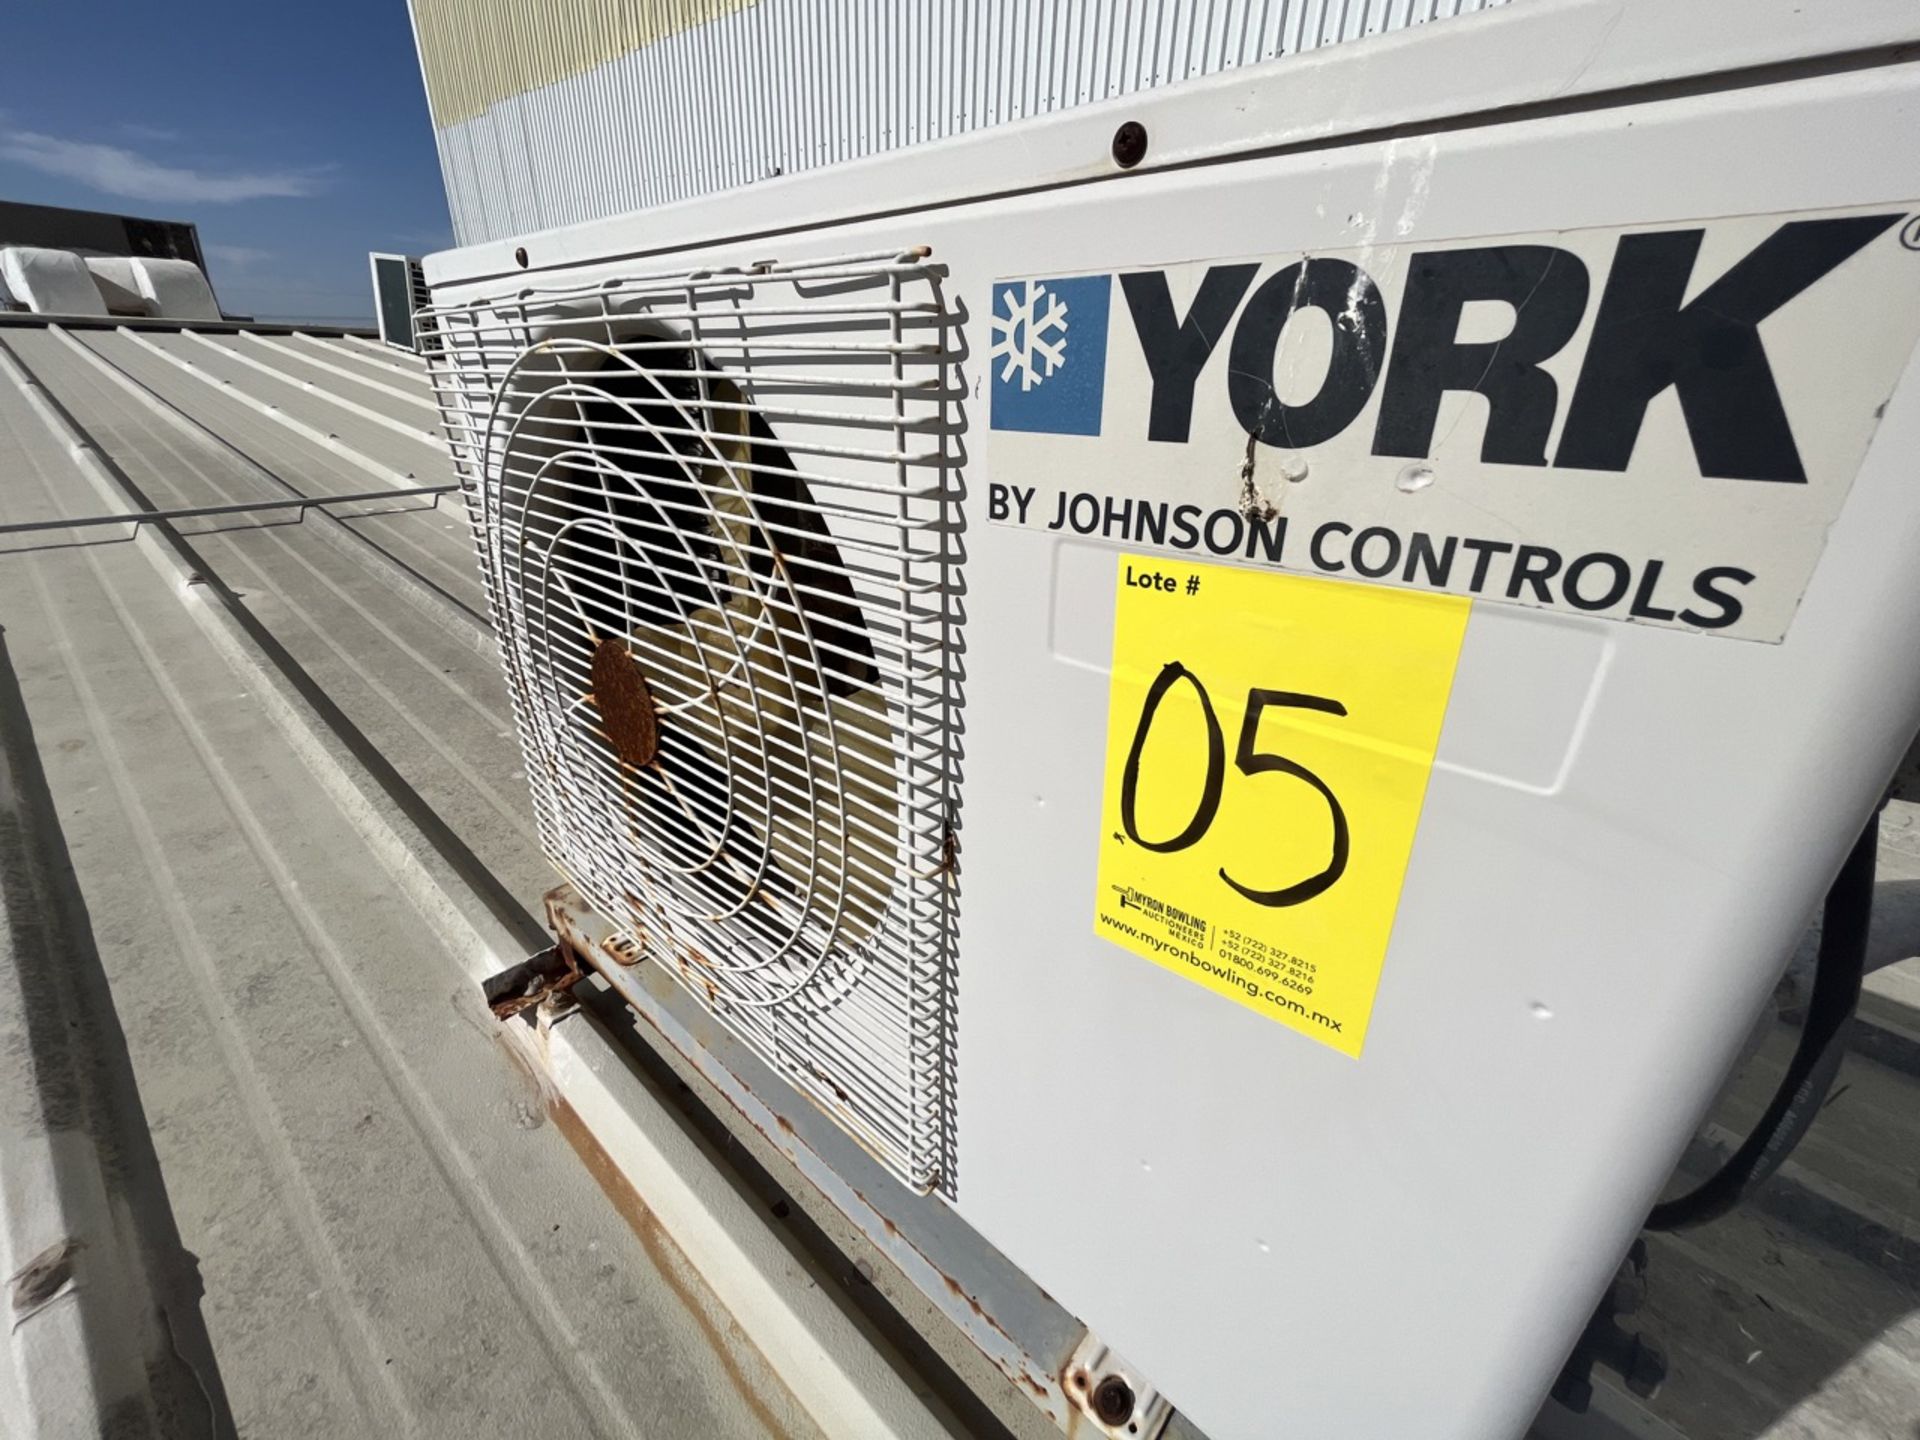 York minisplit air conditioner with control, Model YSEA12FS-ADK, Series 100001010140290128, 220 Vol - Image 10 of 11